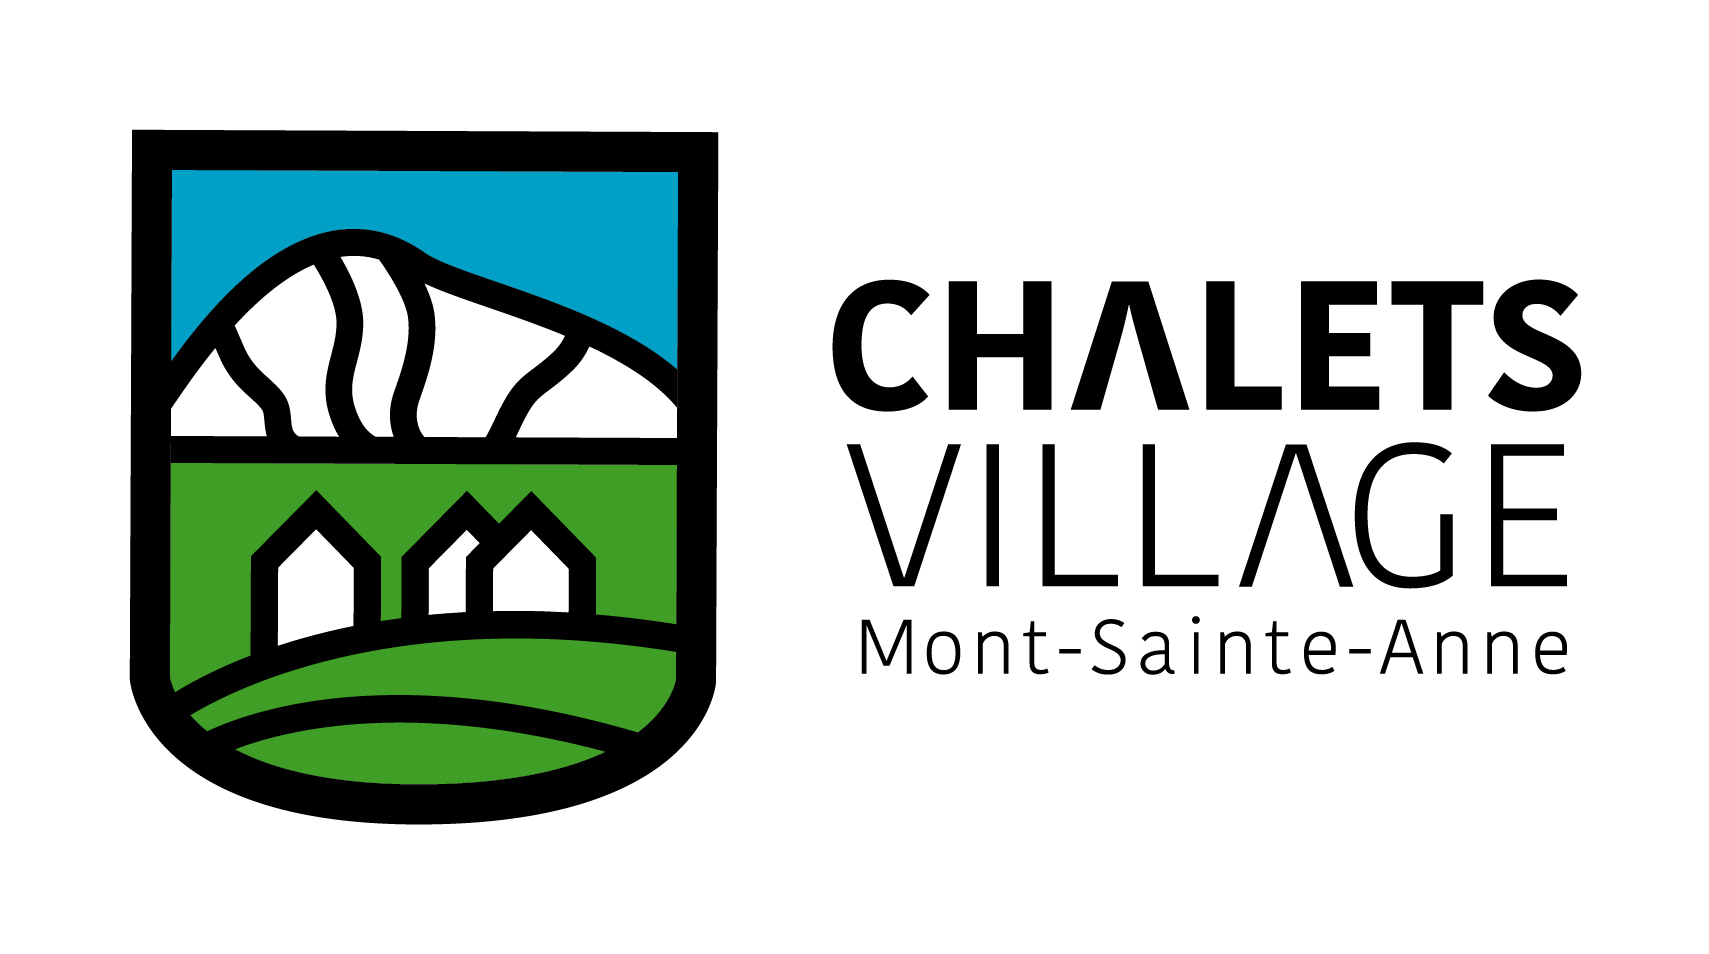 Chalets-Village Mont-Sainte-Anne